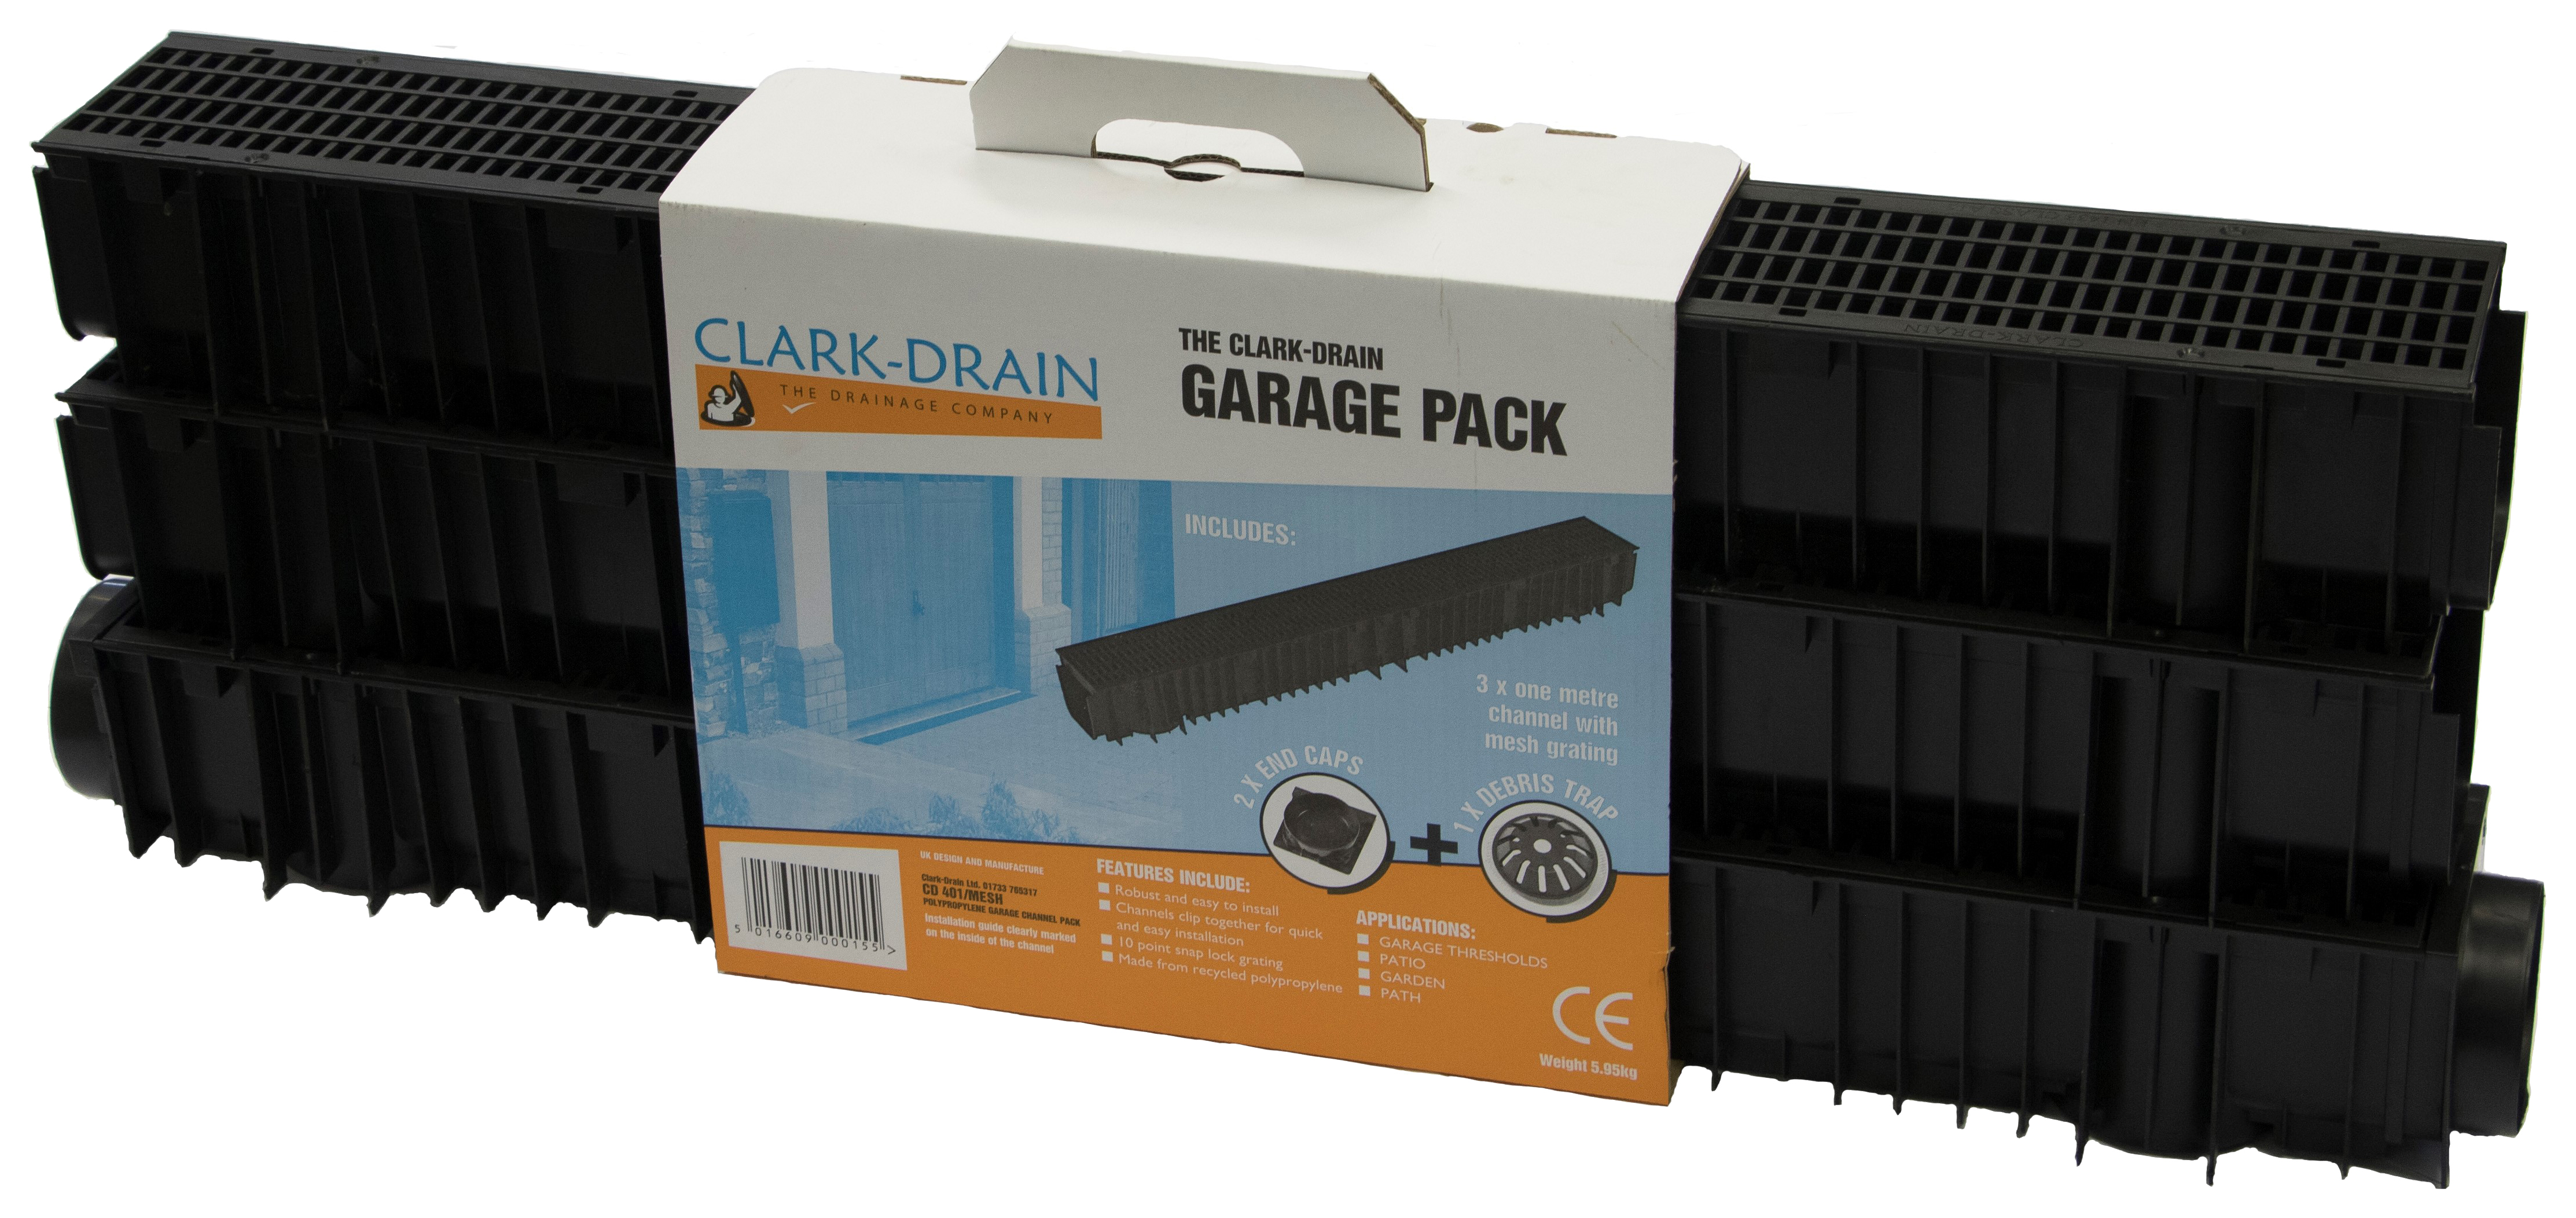 Clark-drain Driveway Channel Drainage Garage Pack